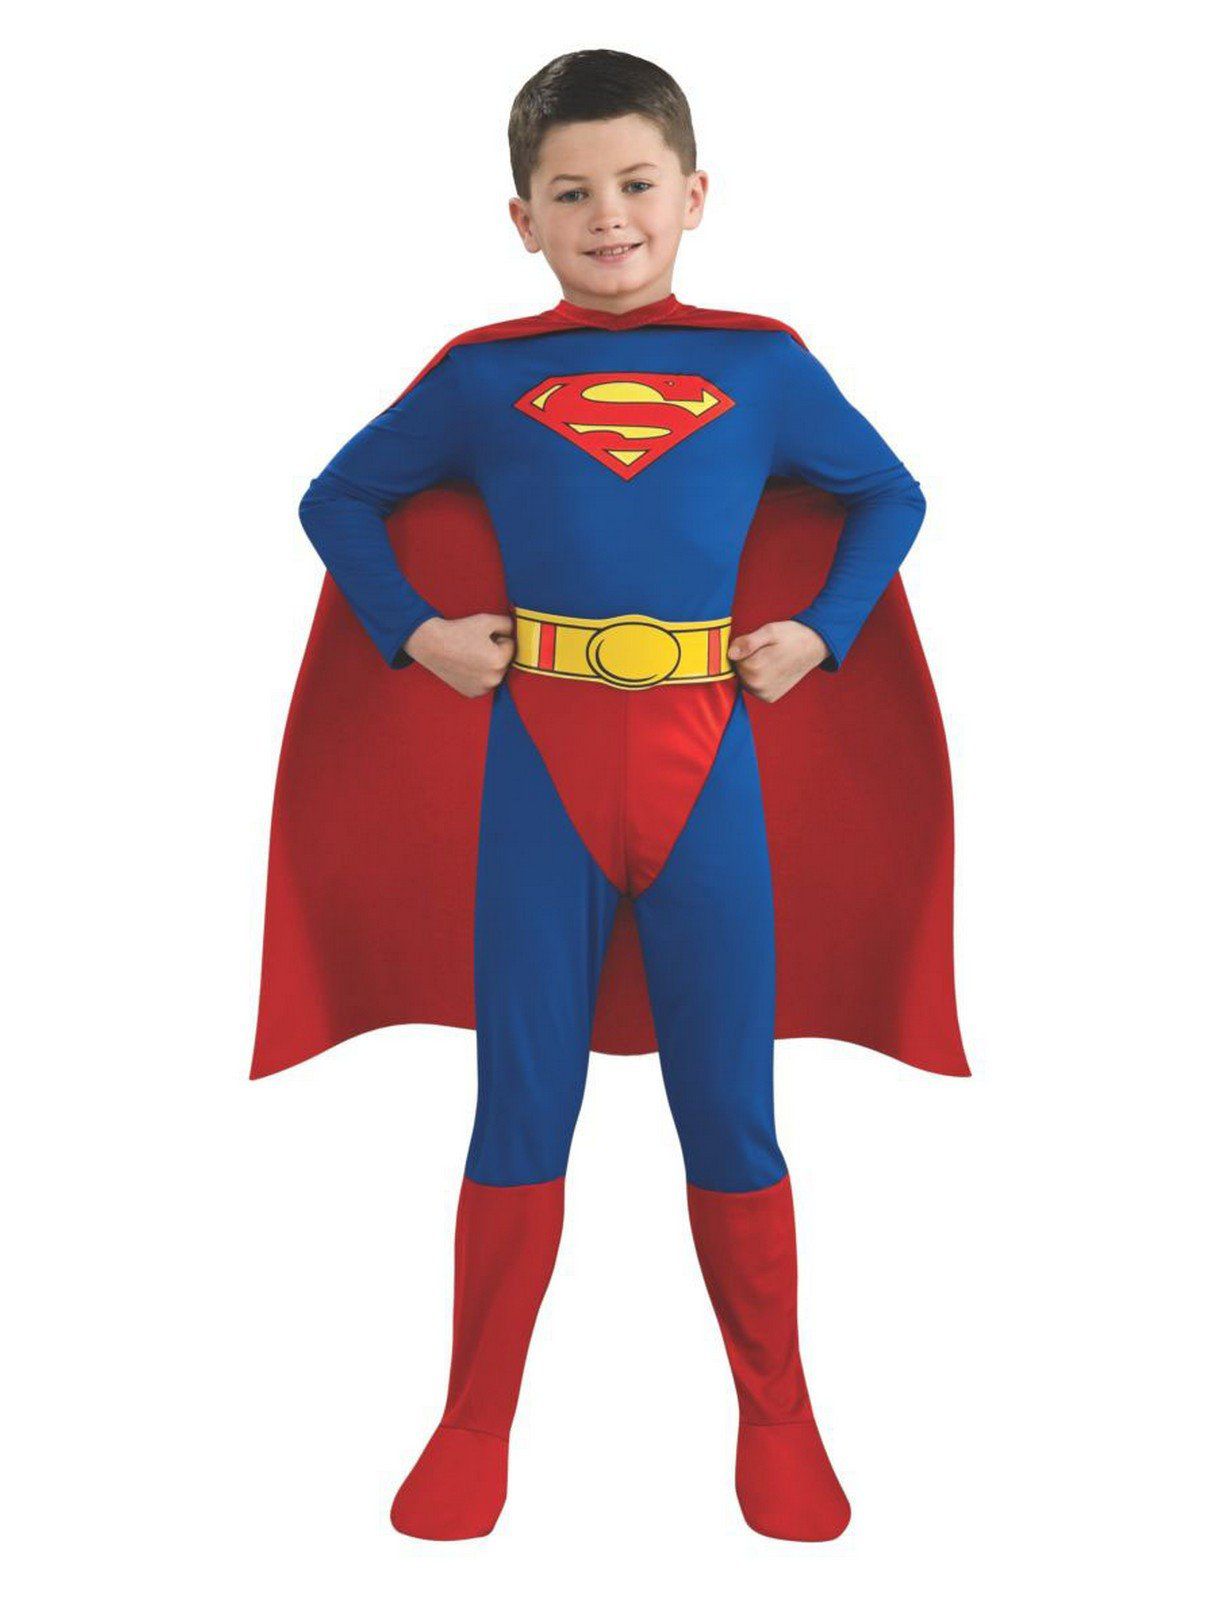 Kid's Justice League Superman Costume - costumes.com